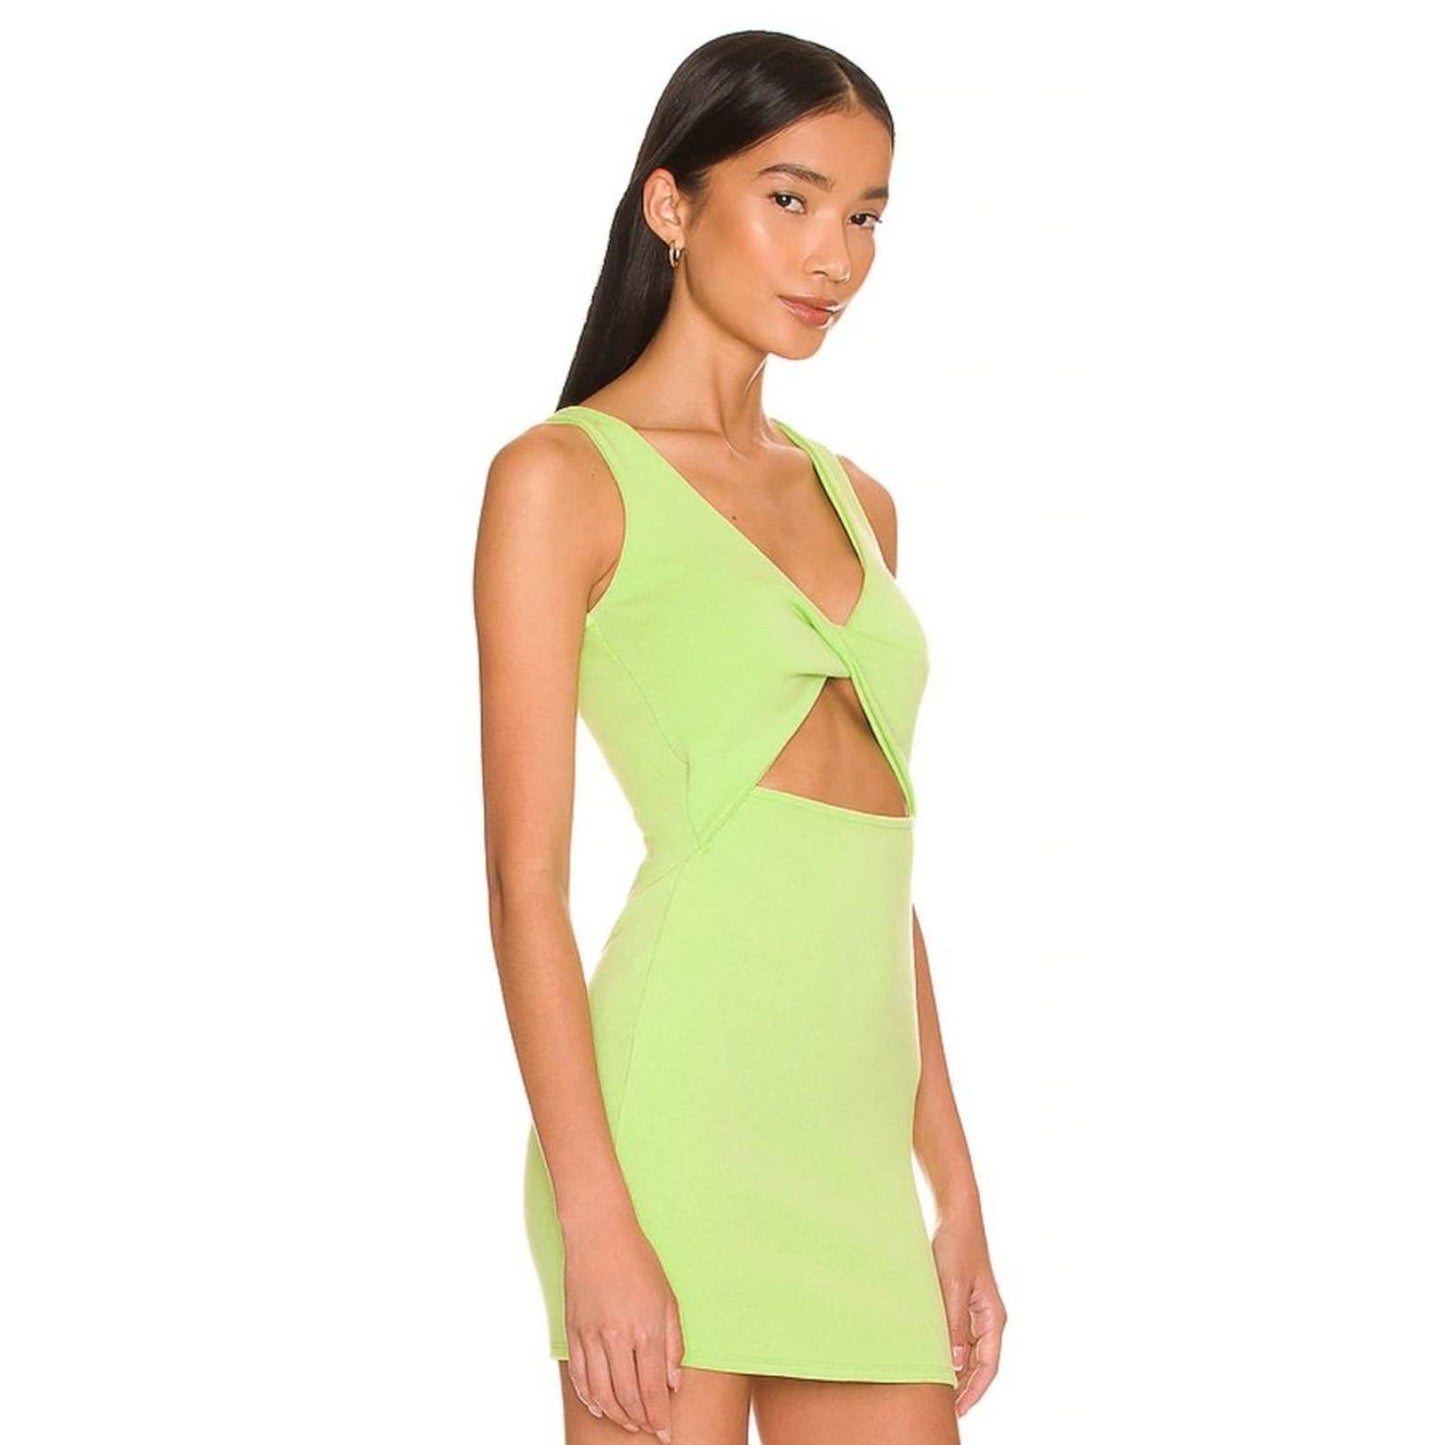 Lovers + Friends Chels Mini Dress in Lime Green NWT Size Medium